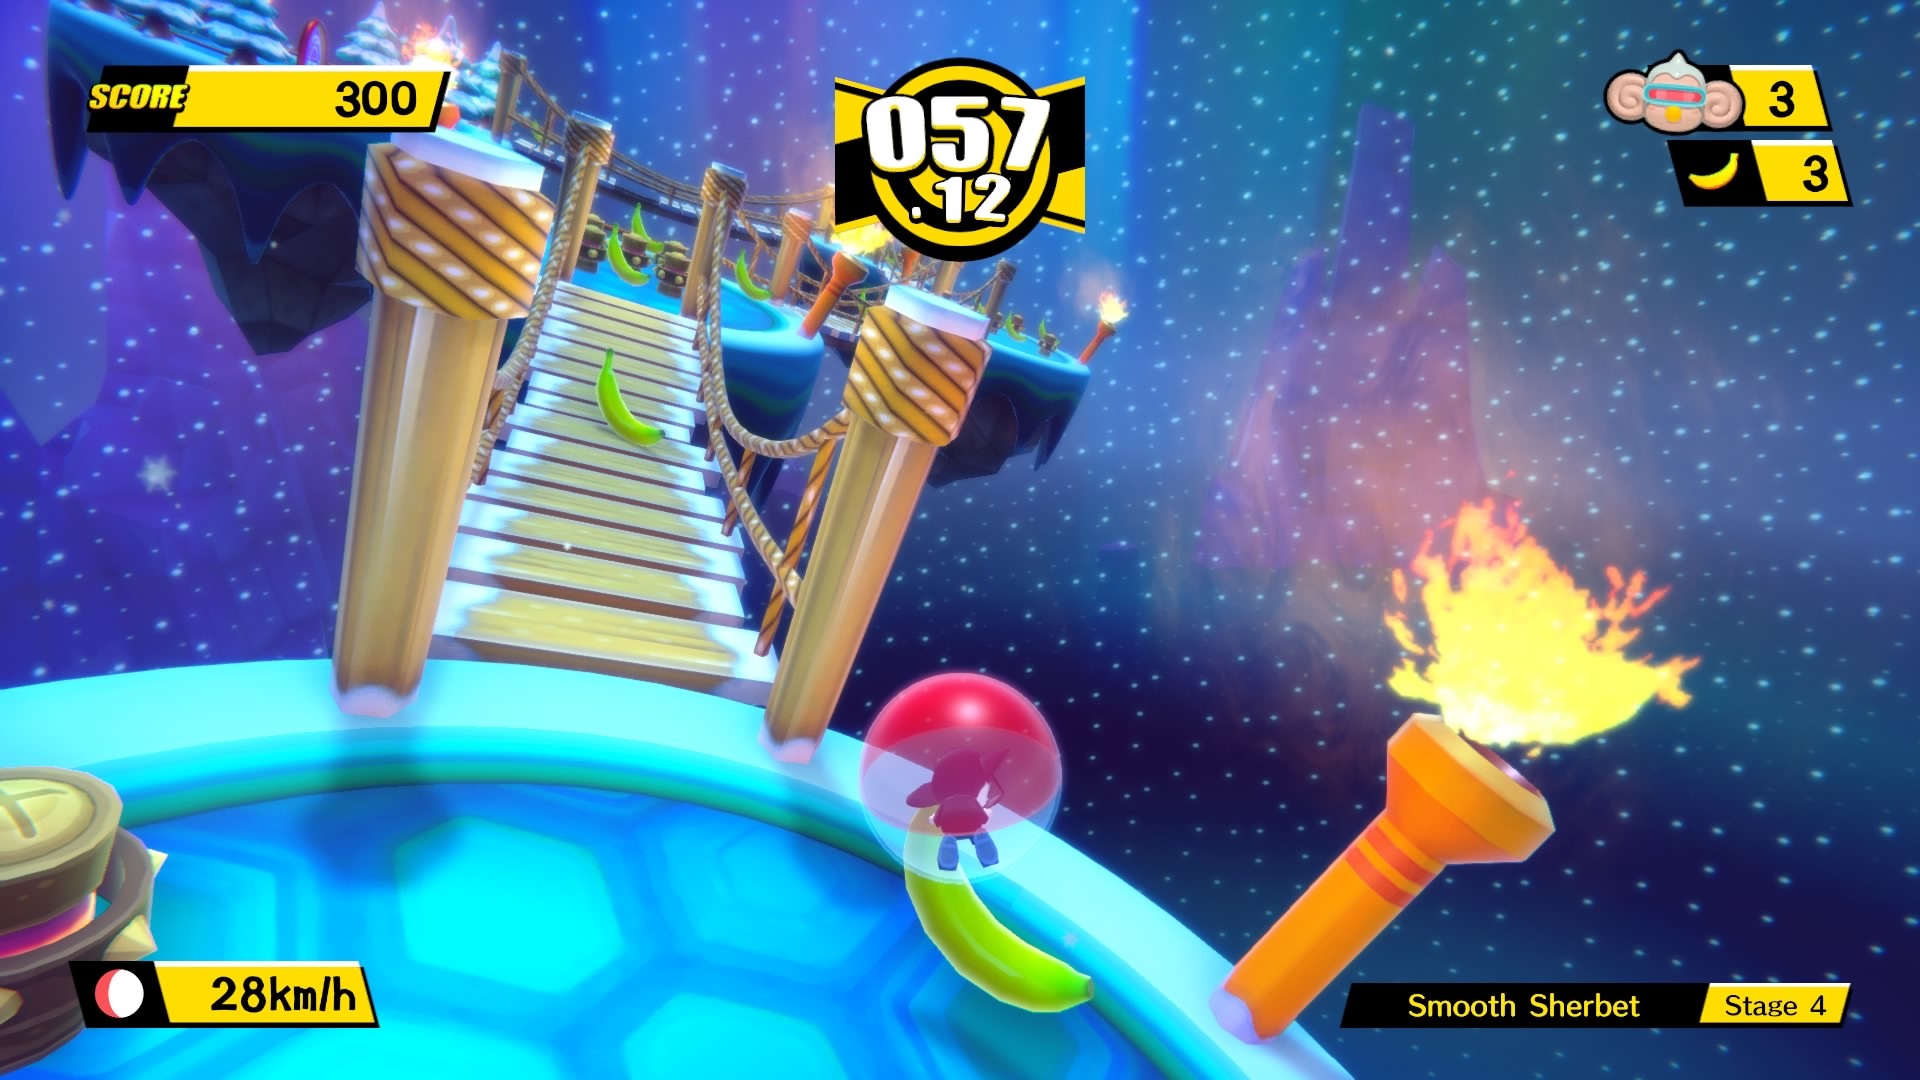 Super Monkey Ball: Banana Blitz HD updated to Version 1.03